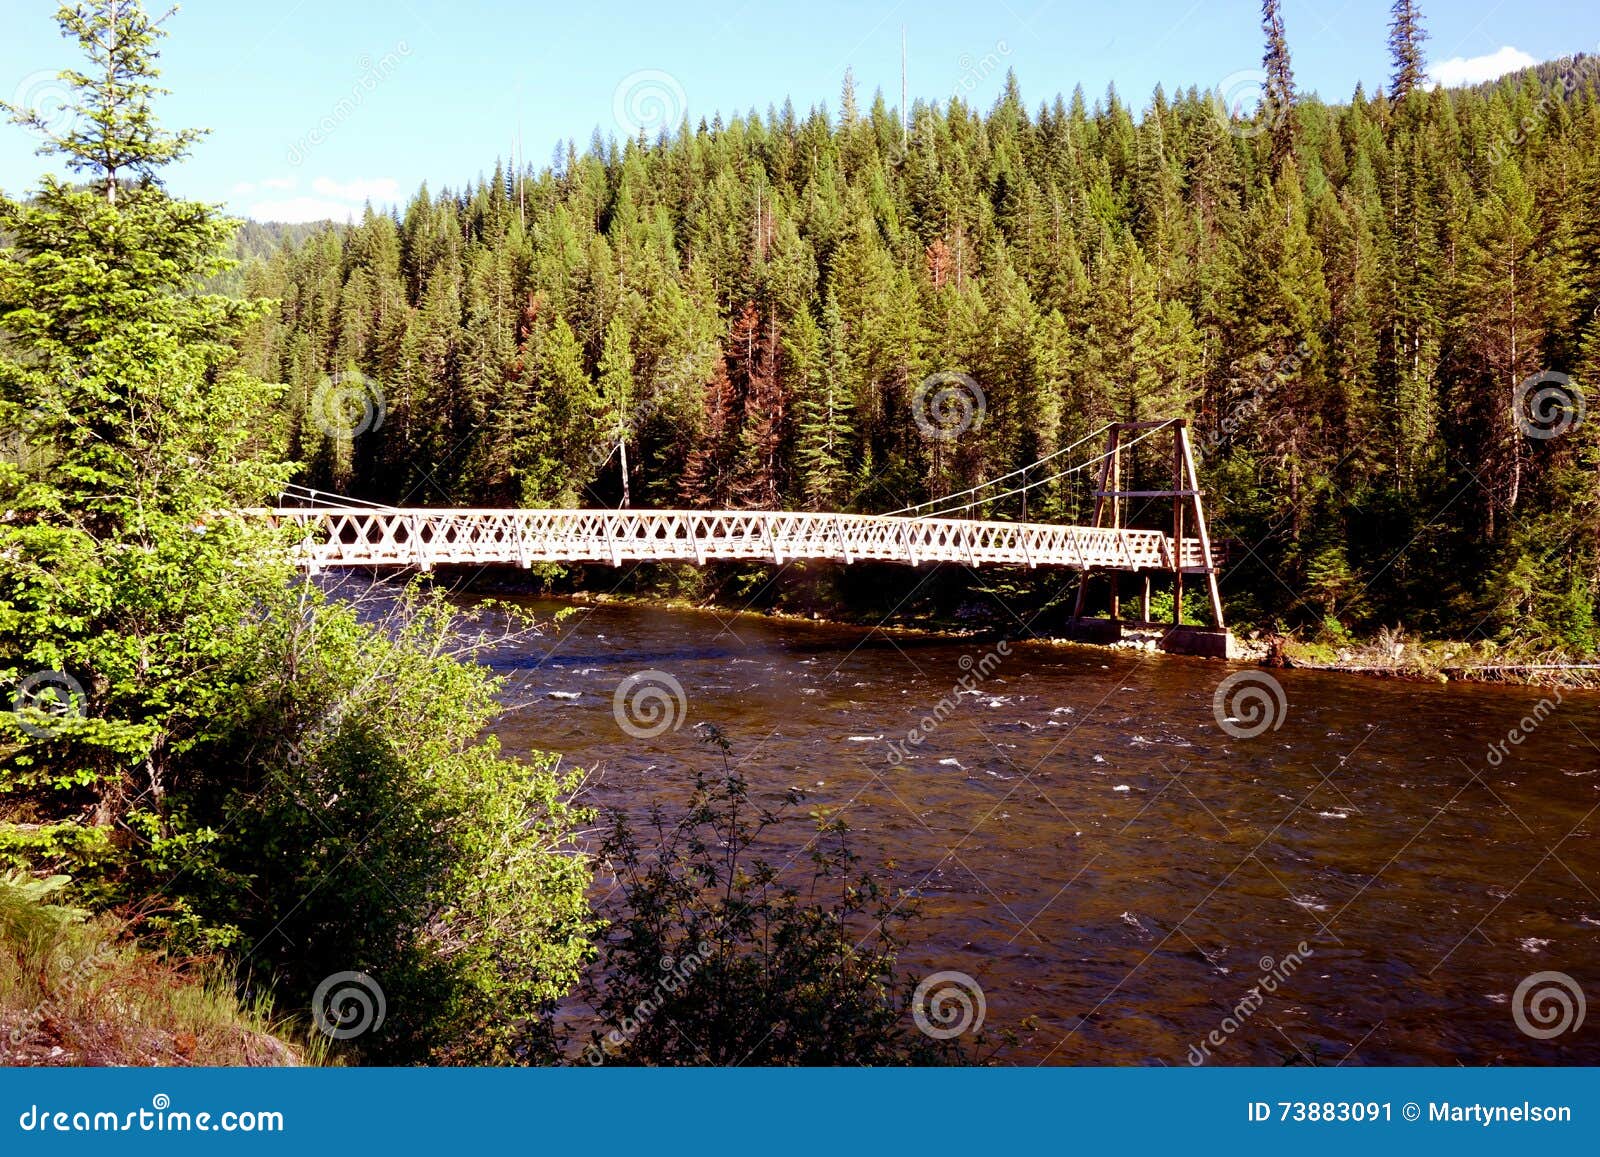 rustic foot bridge - idaho wilderness